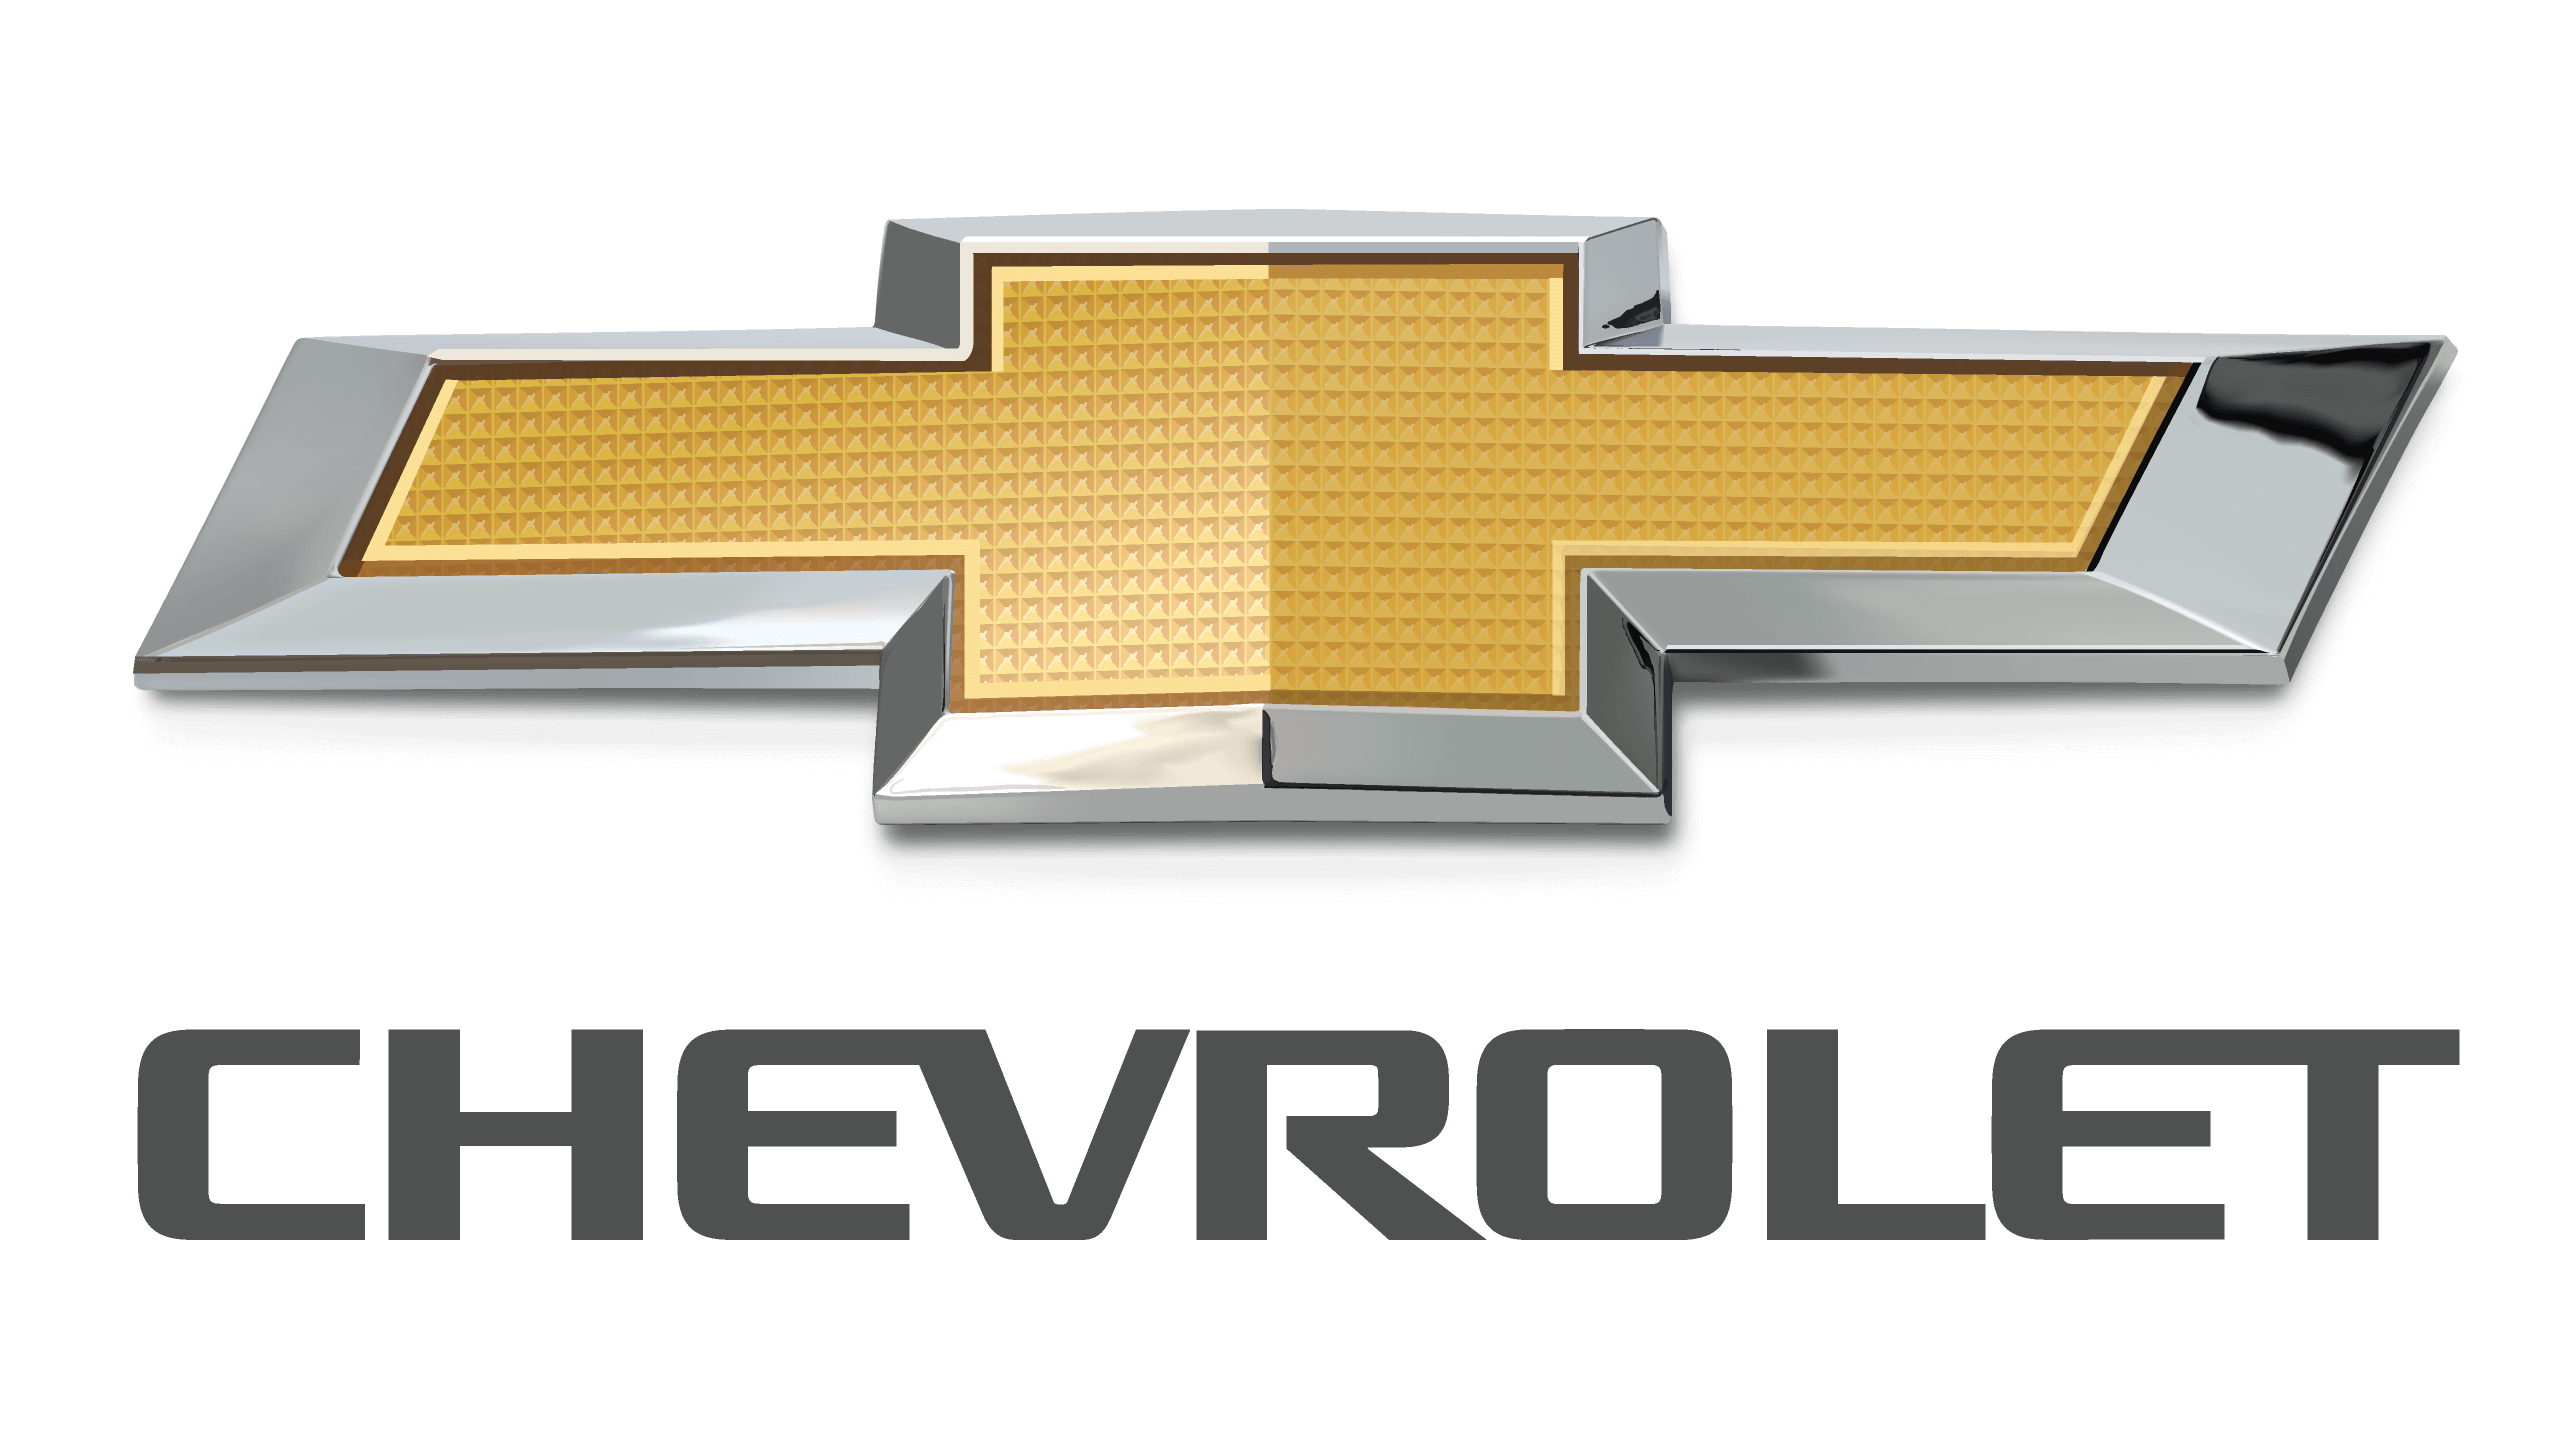 2021-2022 Chevy Tahoe SSV & PPV, 2019-2022 Silverado/Sierra 1500 And 2020-2022 Silverado Sierra 2500HD/3500HD Trucks With WT And LT Trim Levels